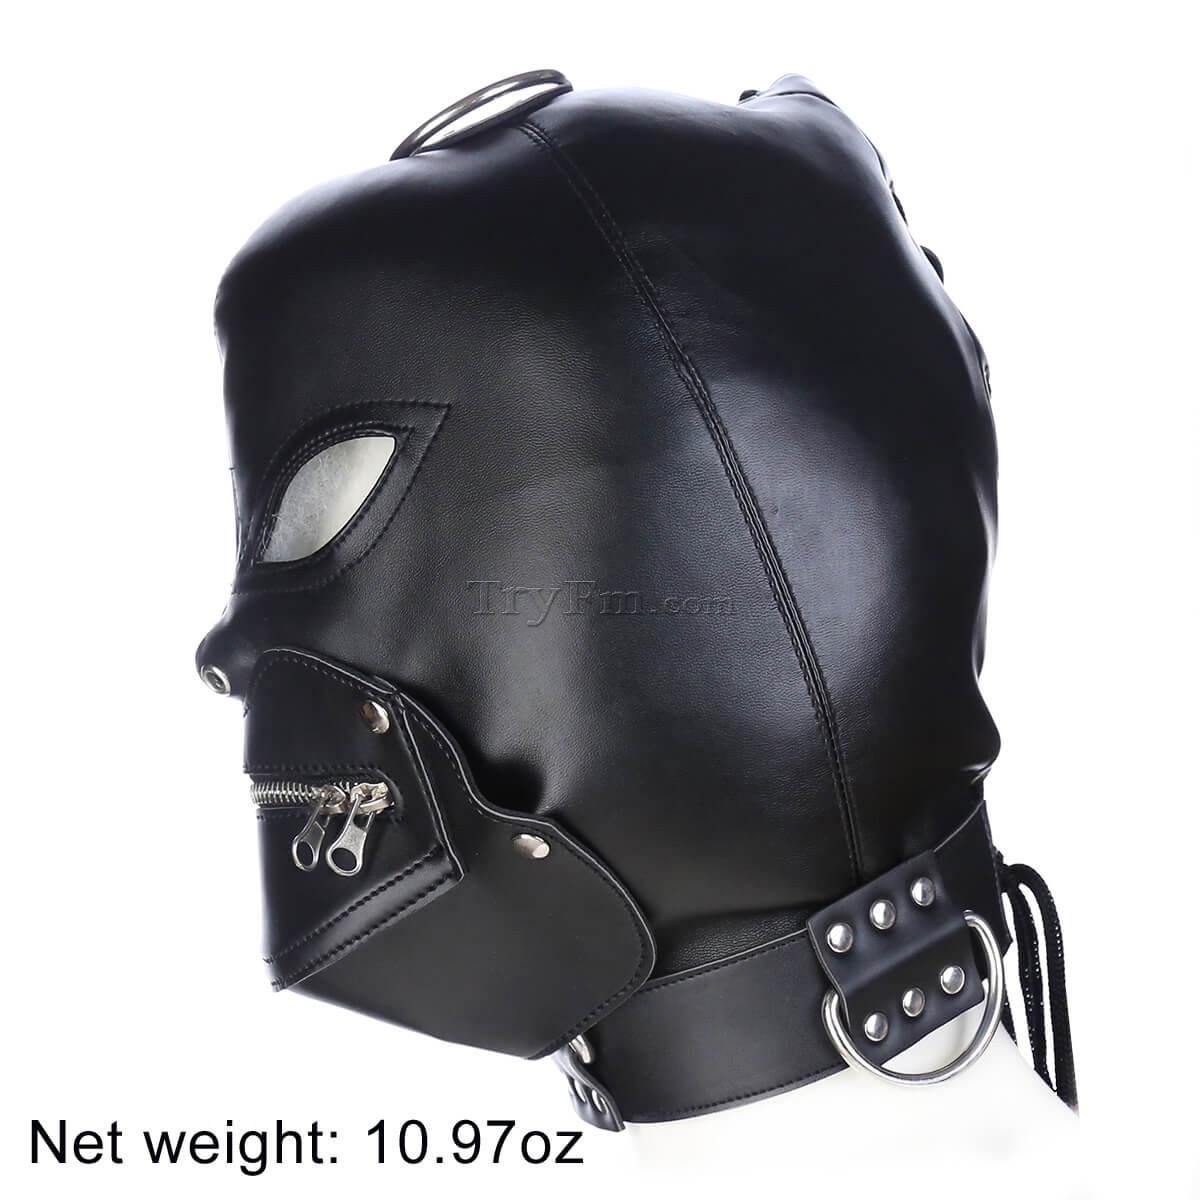 1-Detachable-mask-hood-with-zipper5.jpg